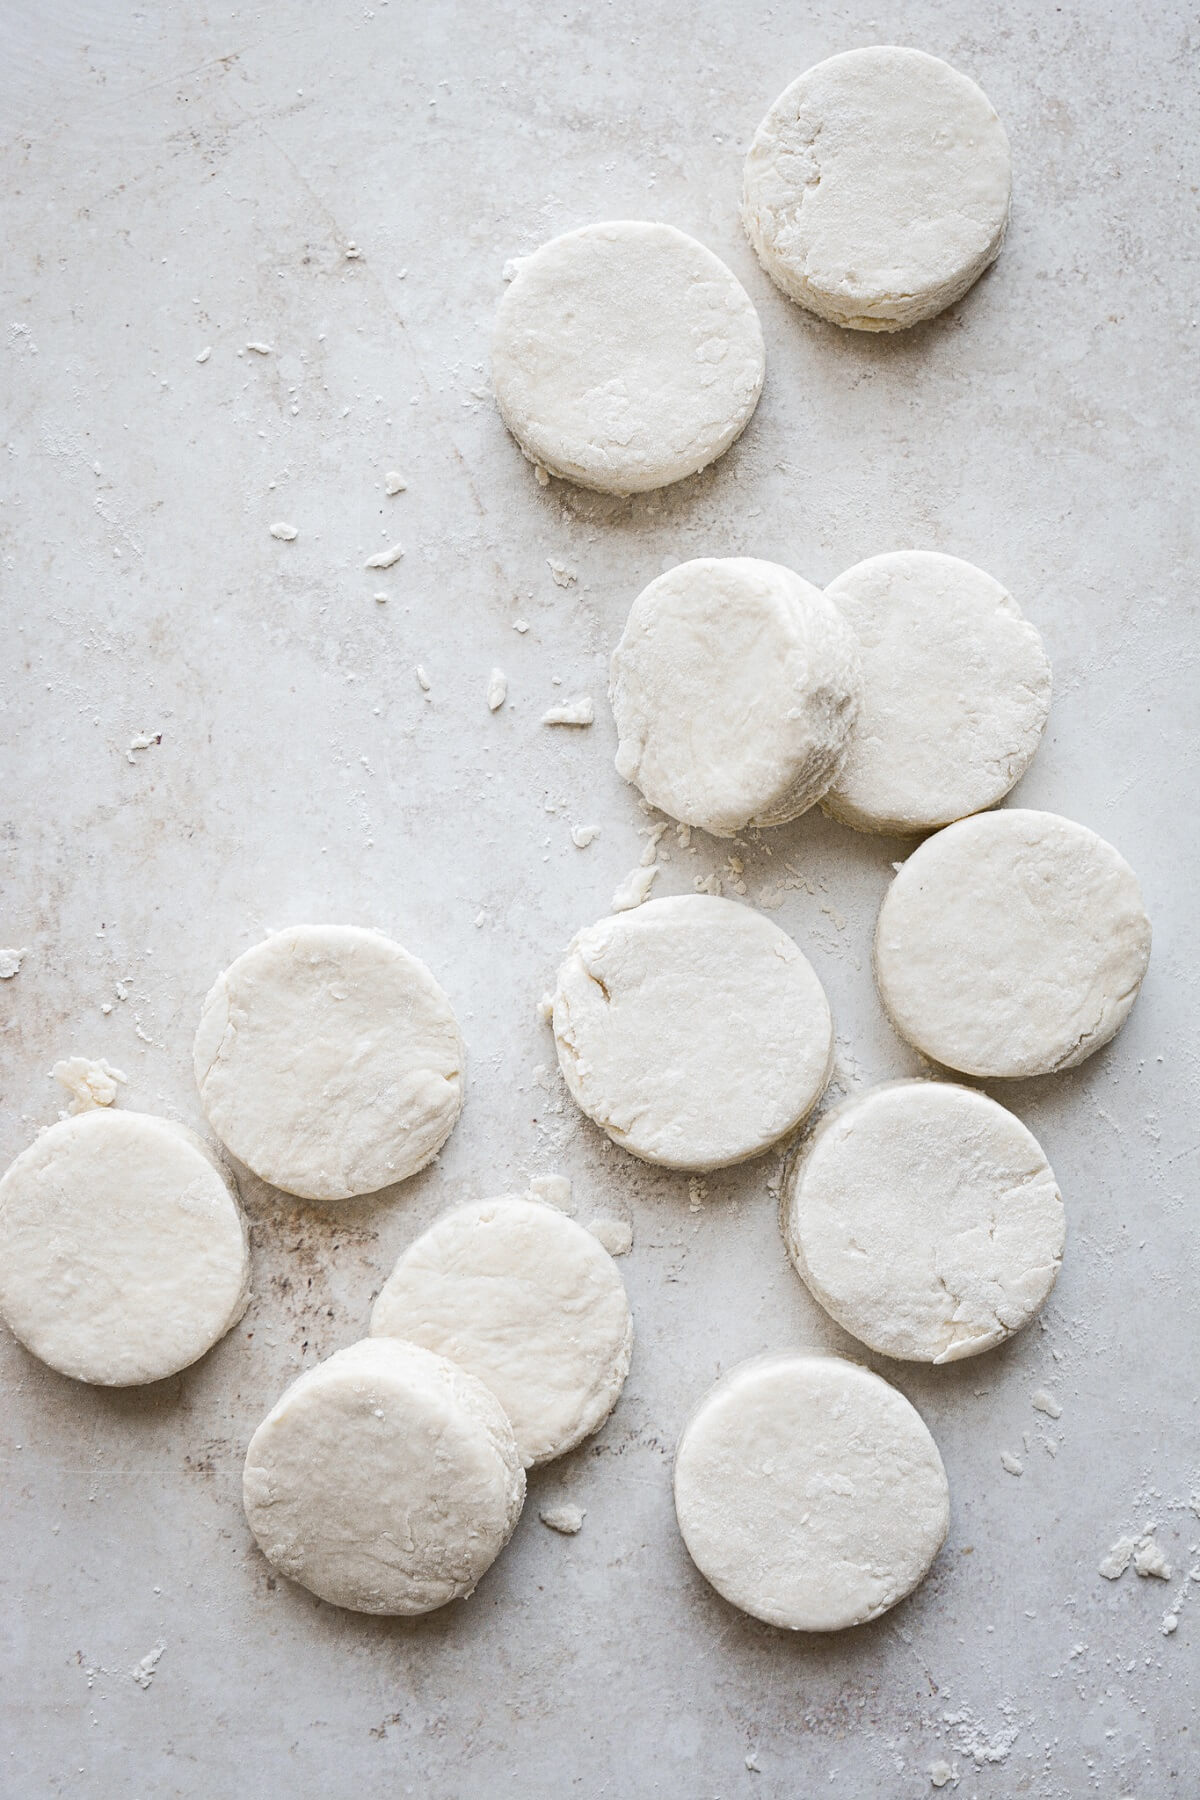 Biscuit dough cut into circles.